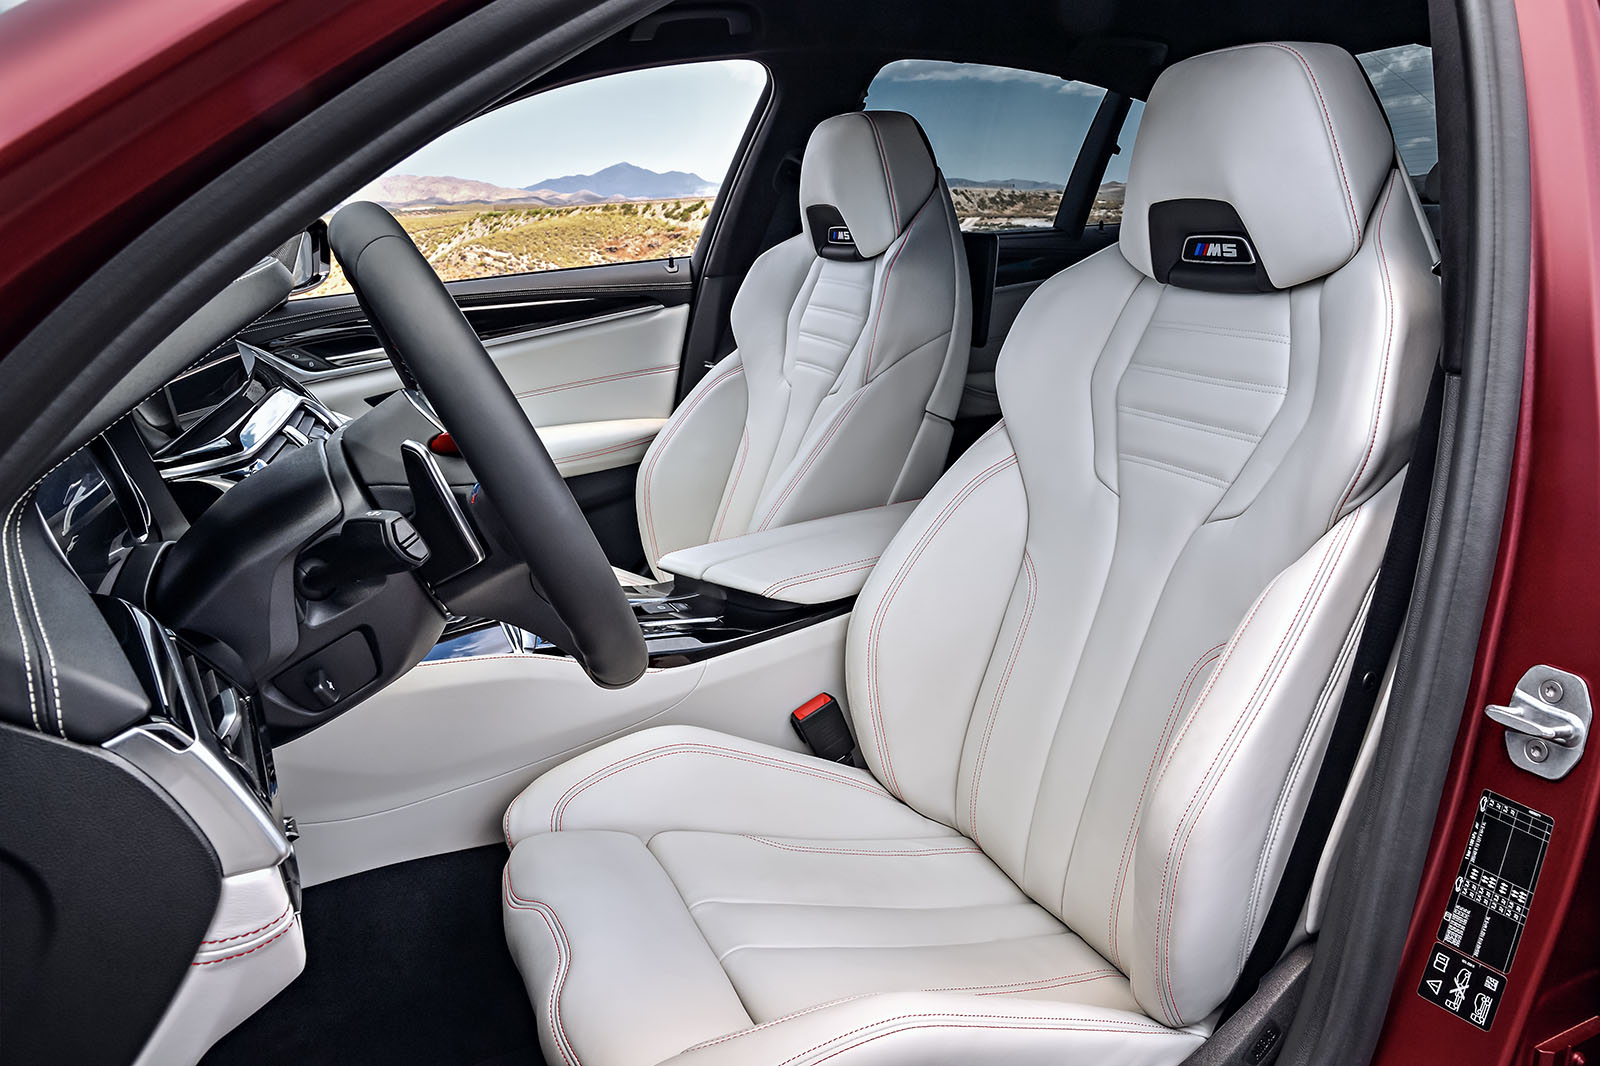 BMW M5 (E60) review, specs, stats, comparison, rivals, data, details,  photos and information on